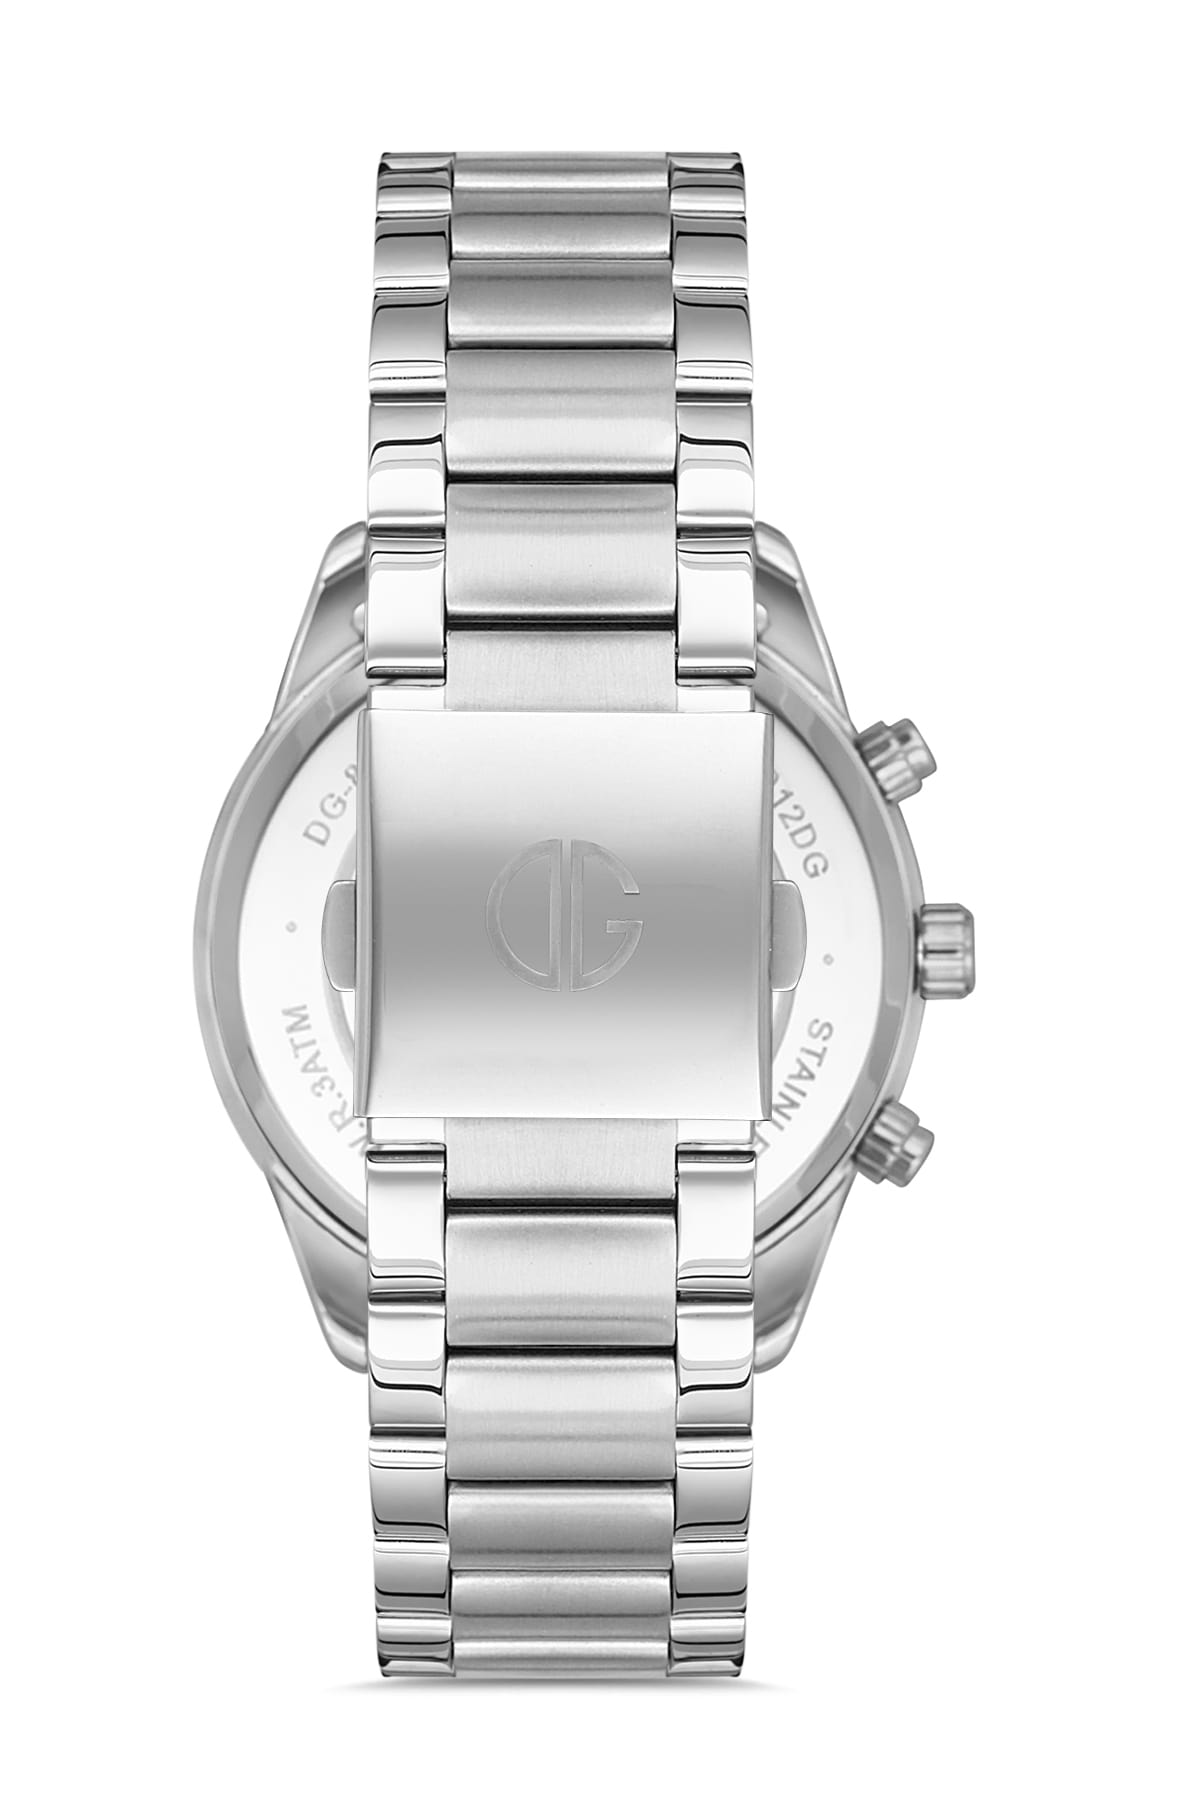 Davıd Guner Multi-Functional Silver Dial Men's Wristwatch